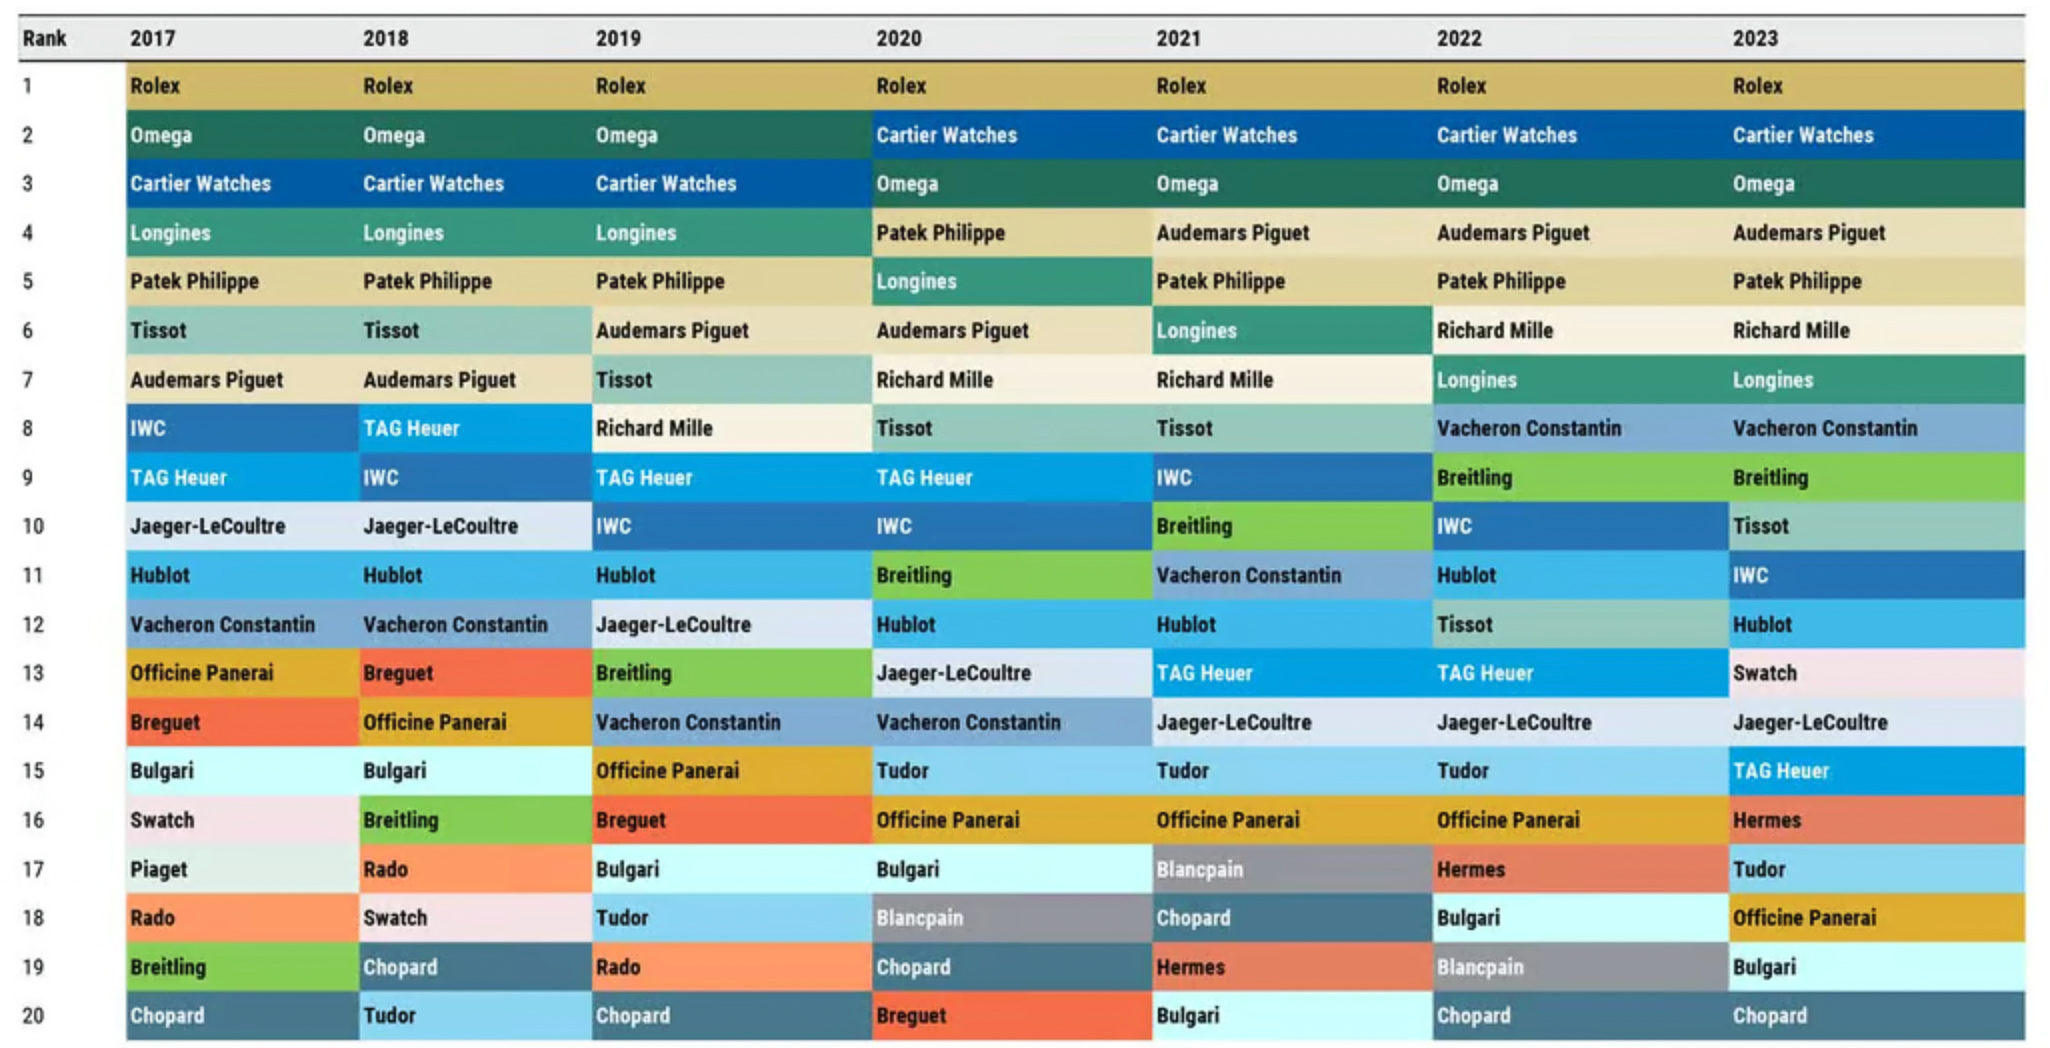 Morgan-Stanleys-Top-20-Swiss-Watch-Company-Ranking-for-2024.jpg